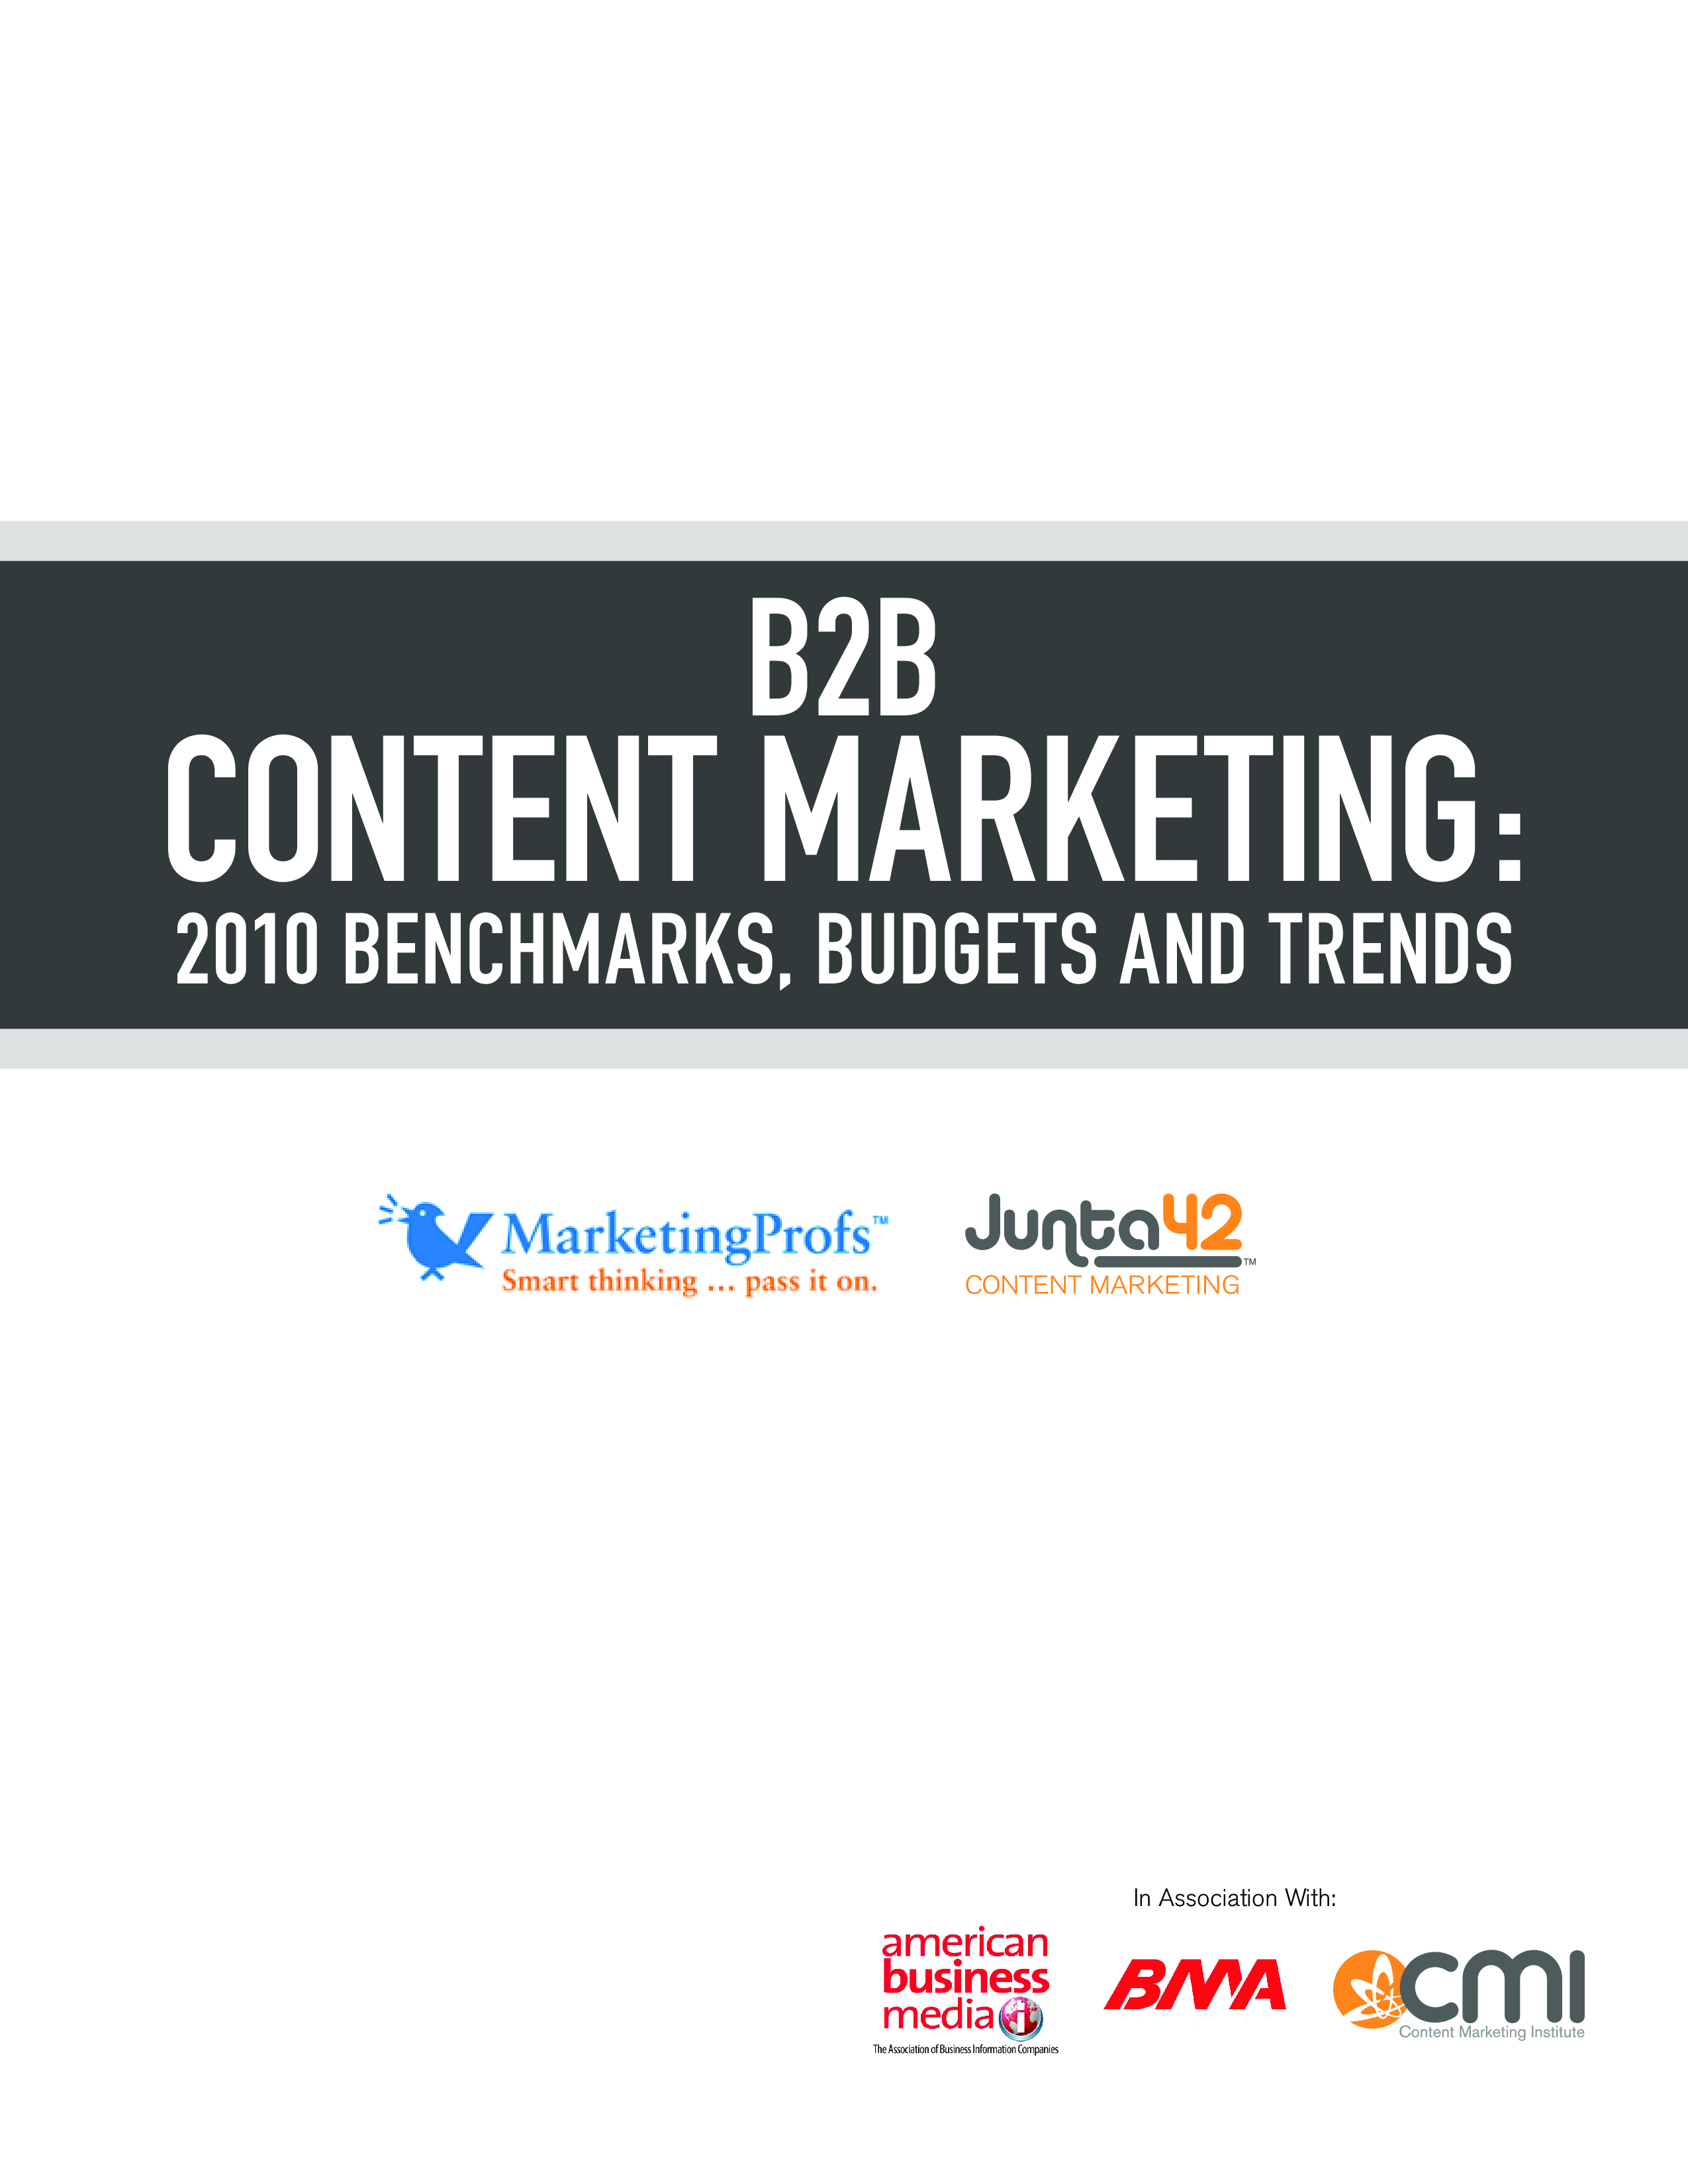 b2b content marketing plantilla imagen principal